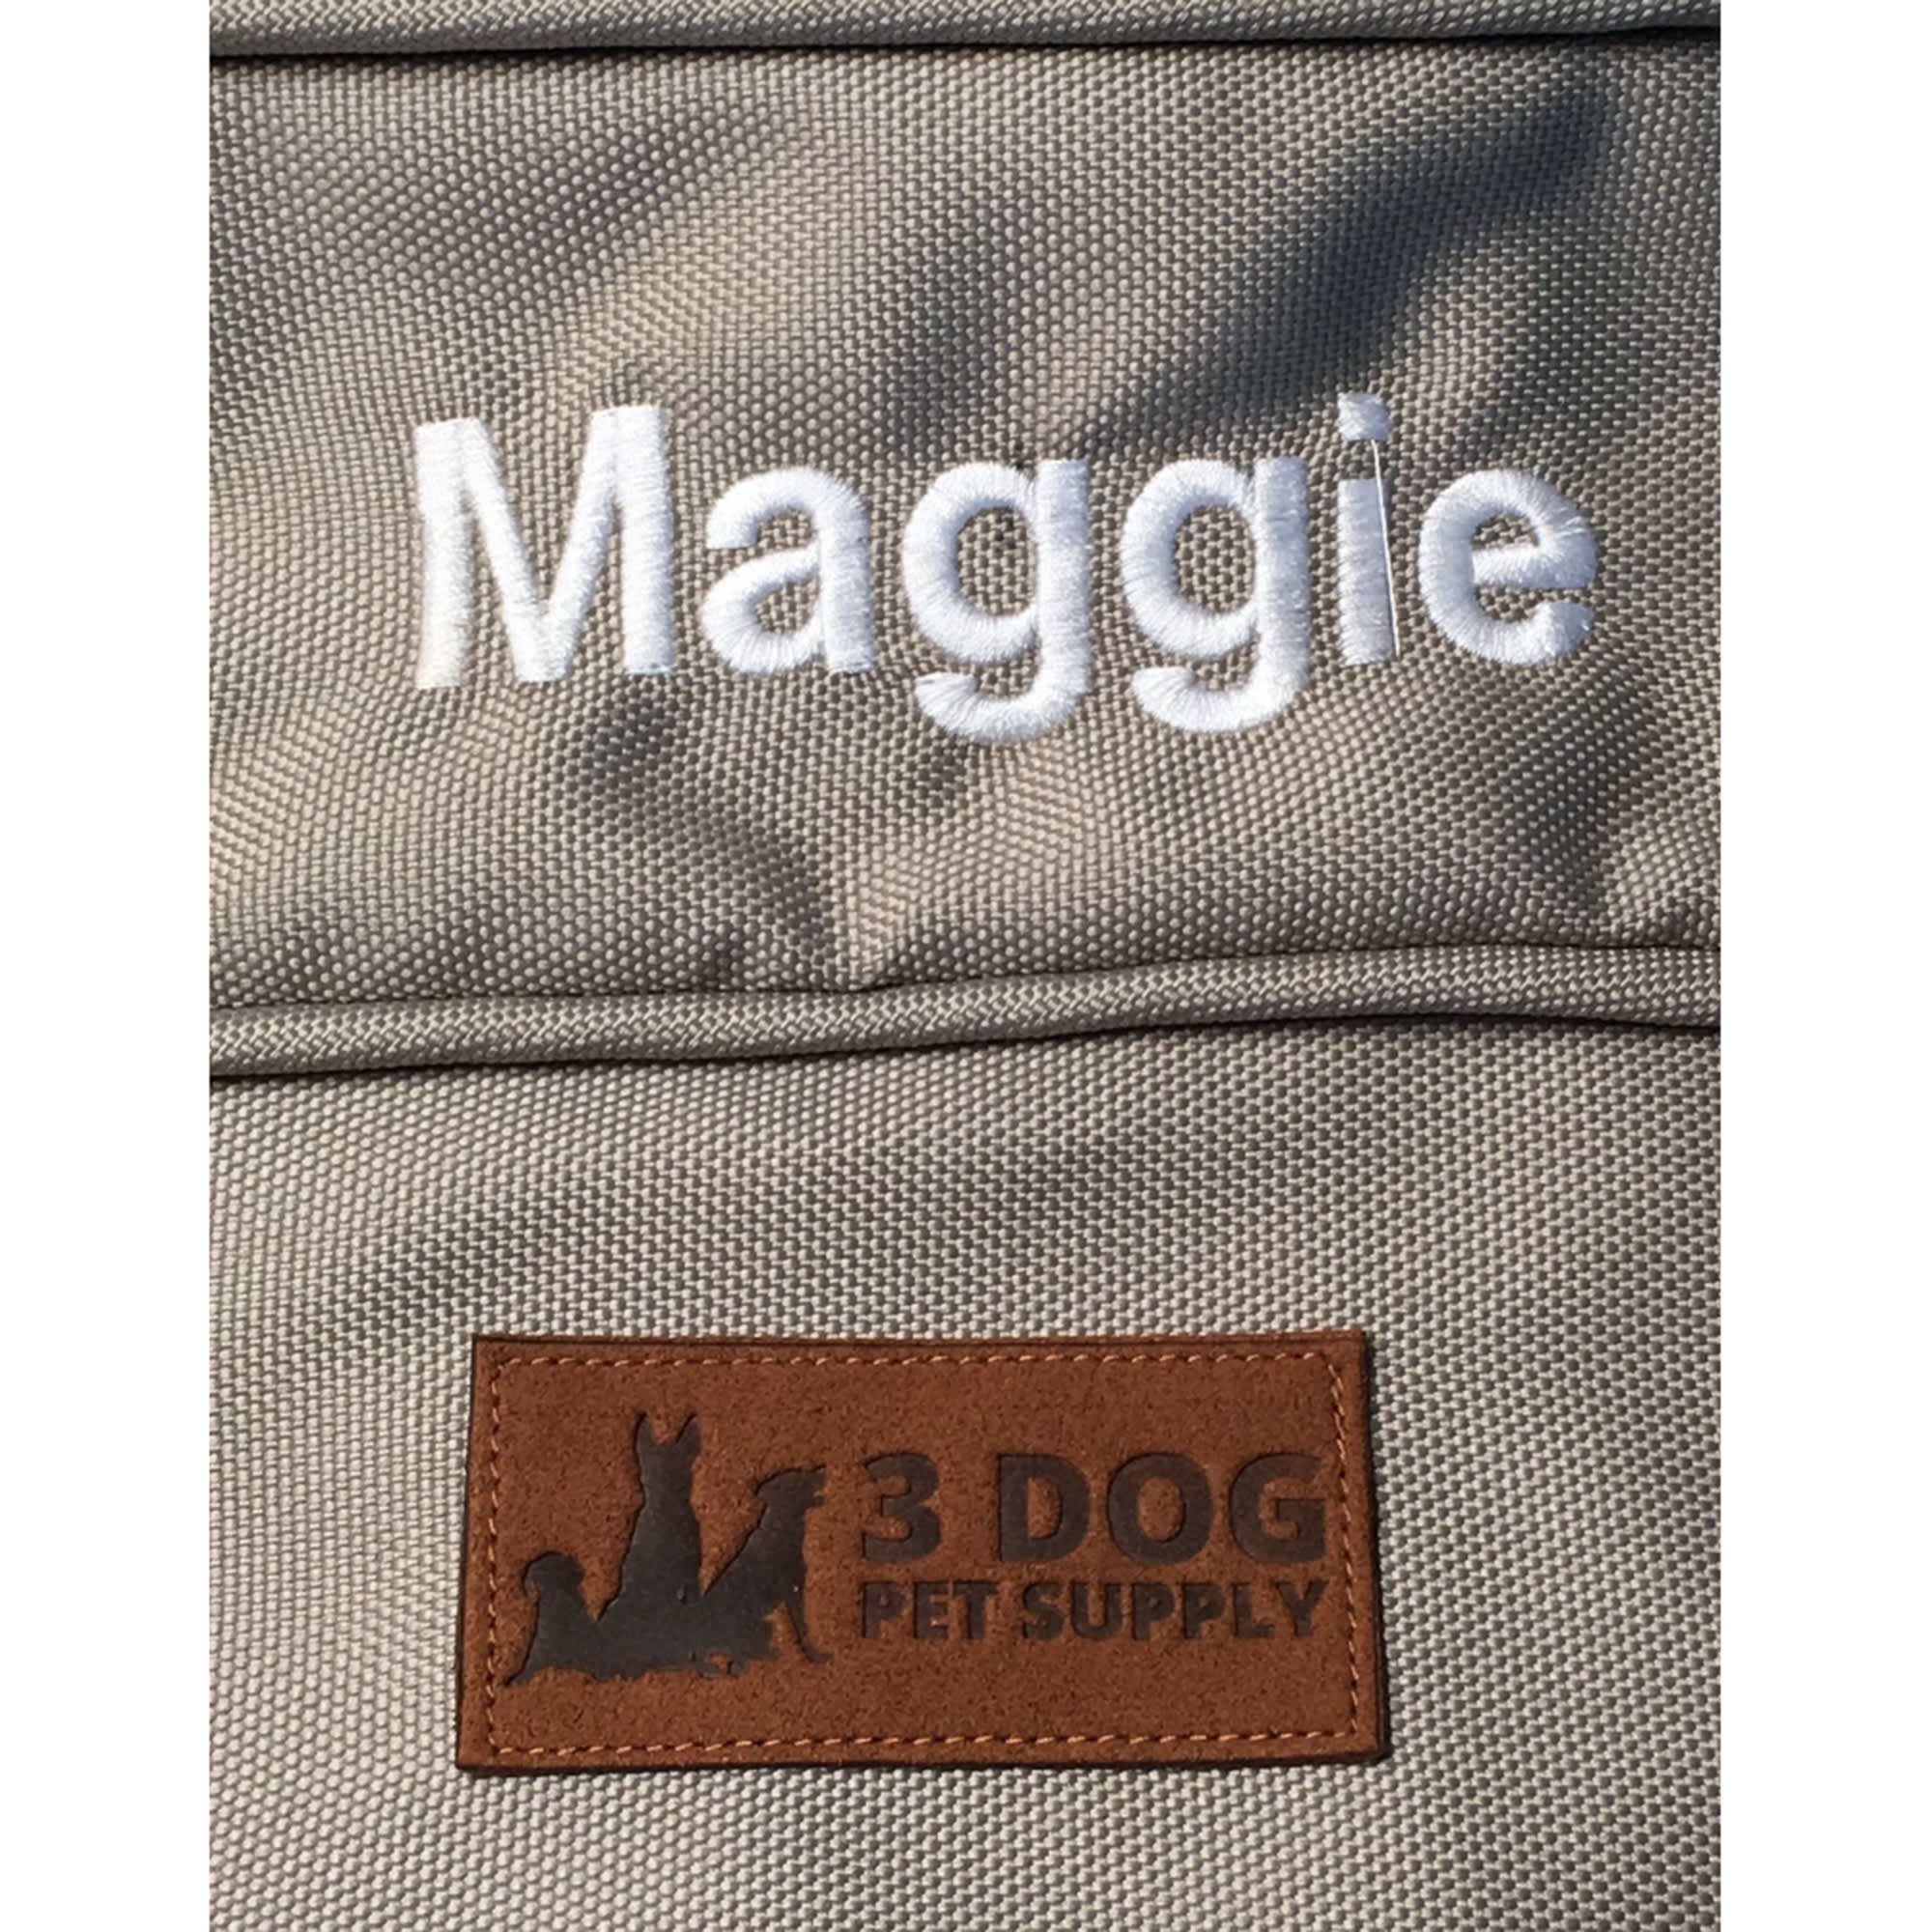 Michigan State Spartans 3 Dog Pet Supply Large EZ Wash Fleece Headrest Bed - Gray